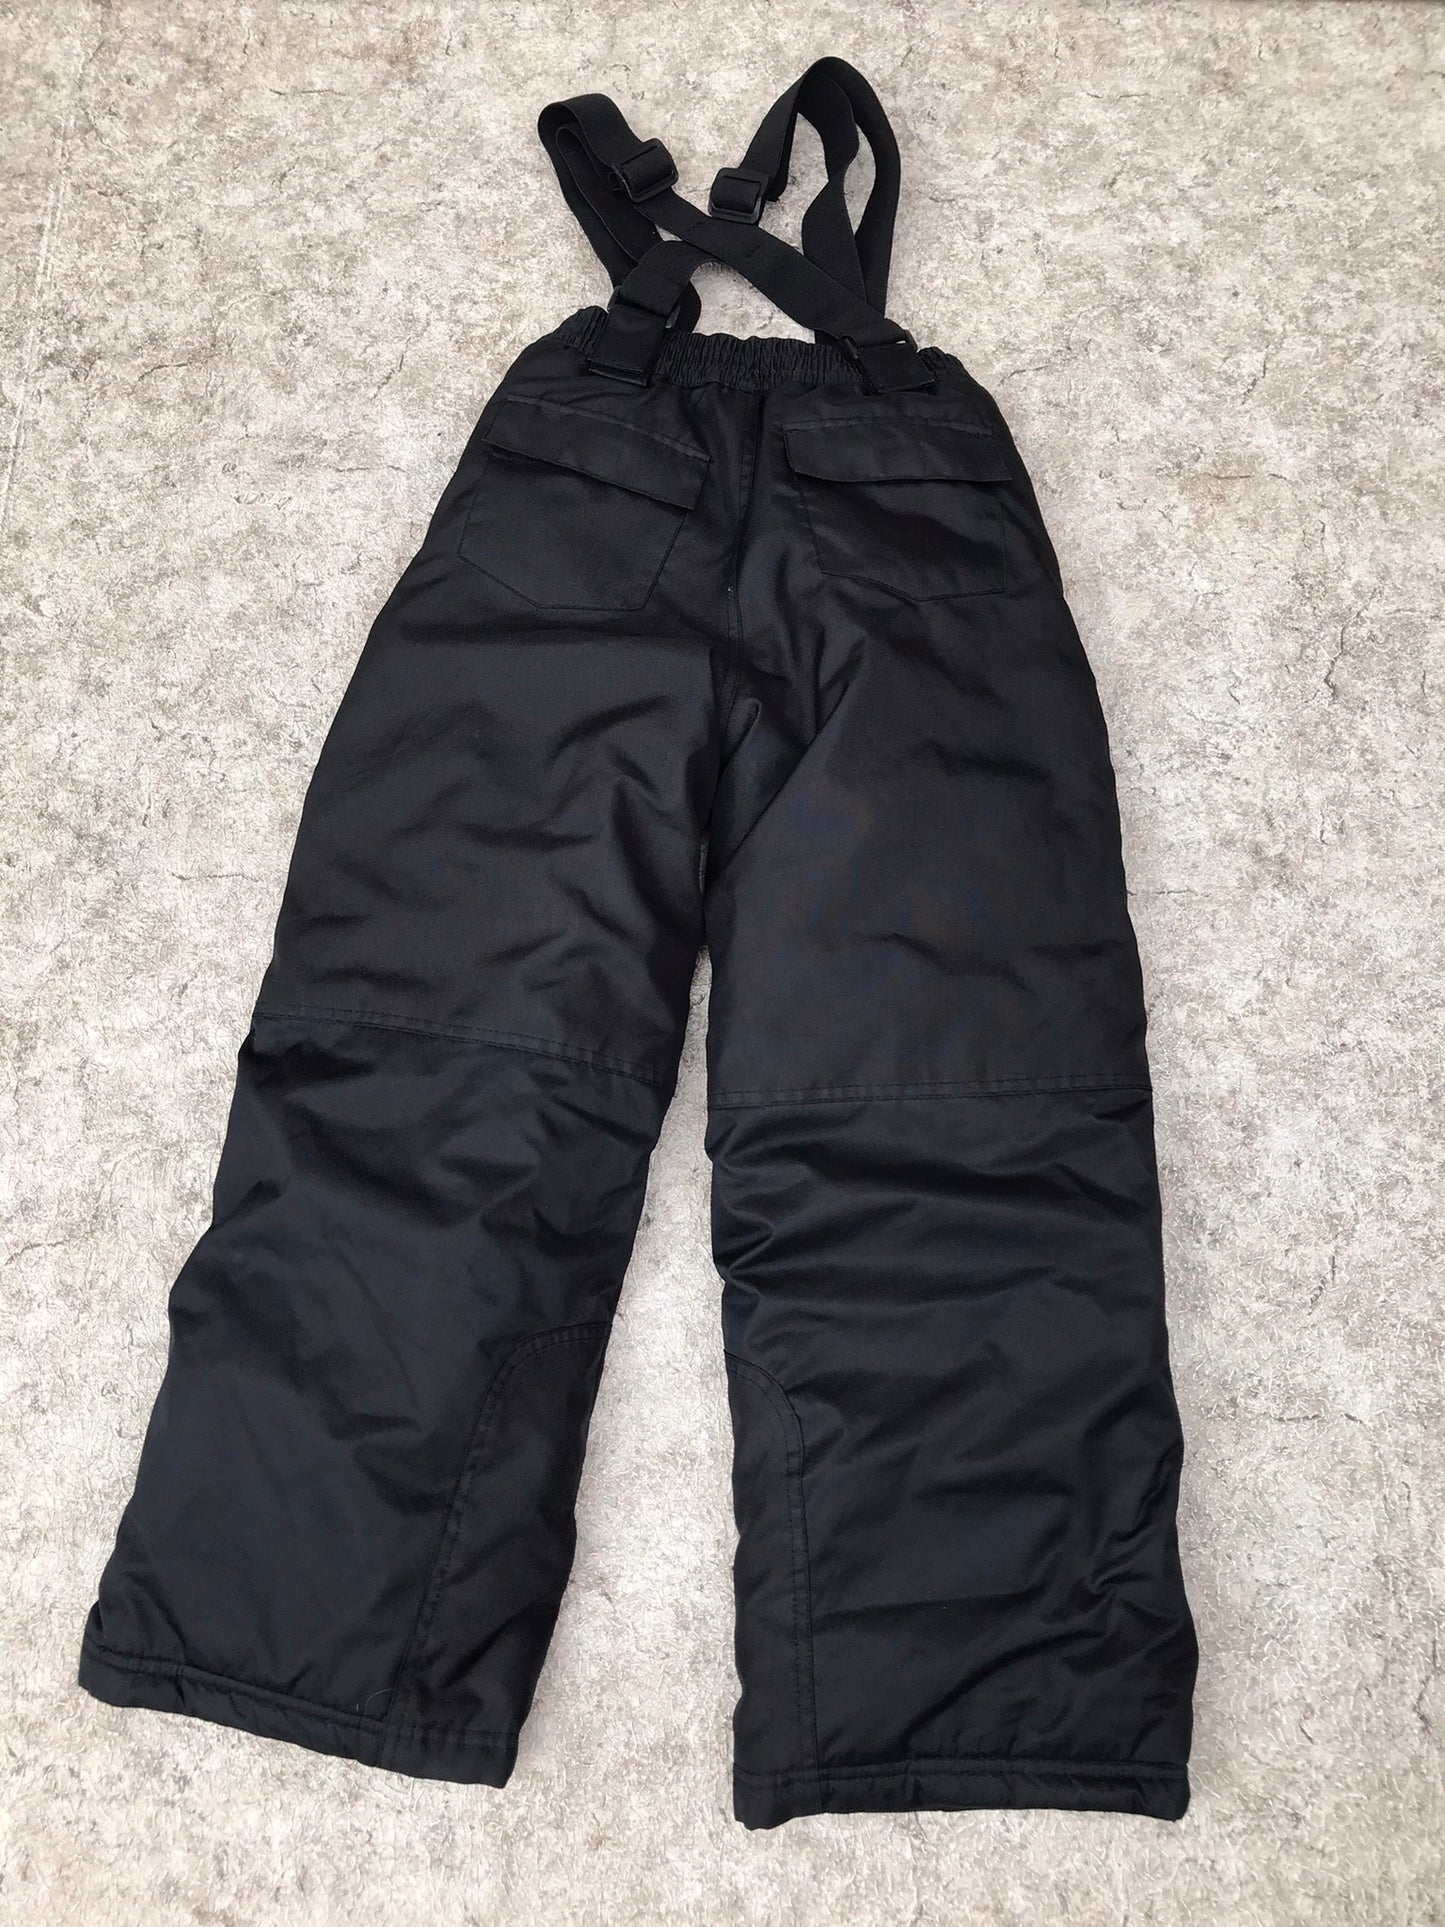 Snow Pants Child Size 7-8 Athletic Fleece Lined Black Straps